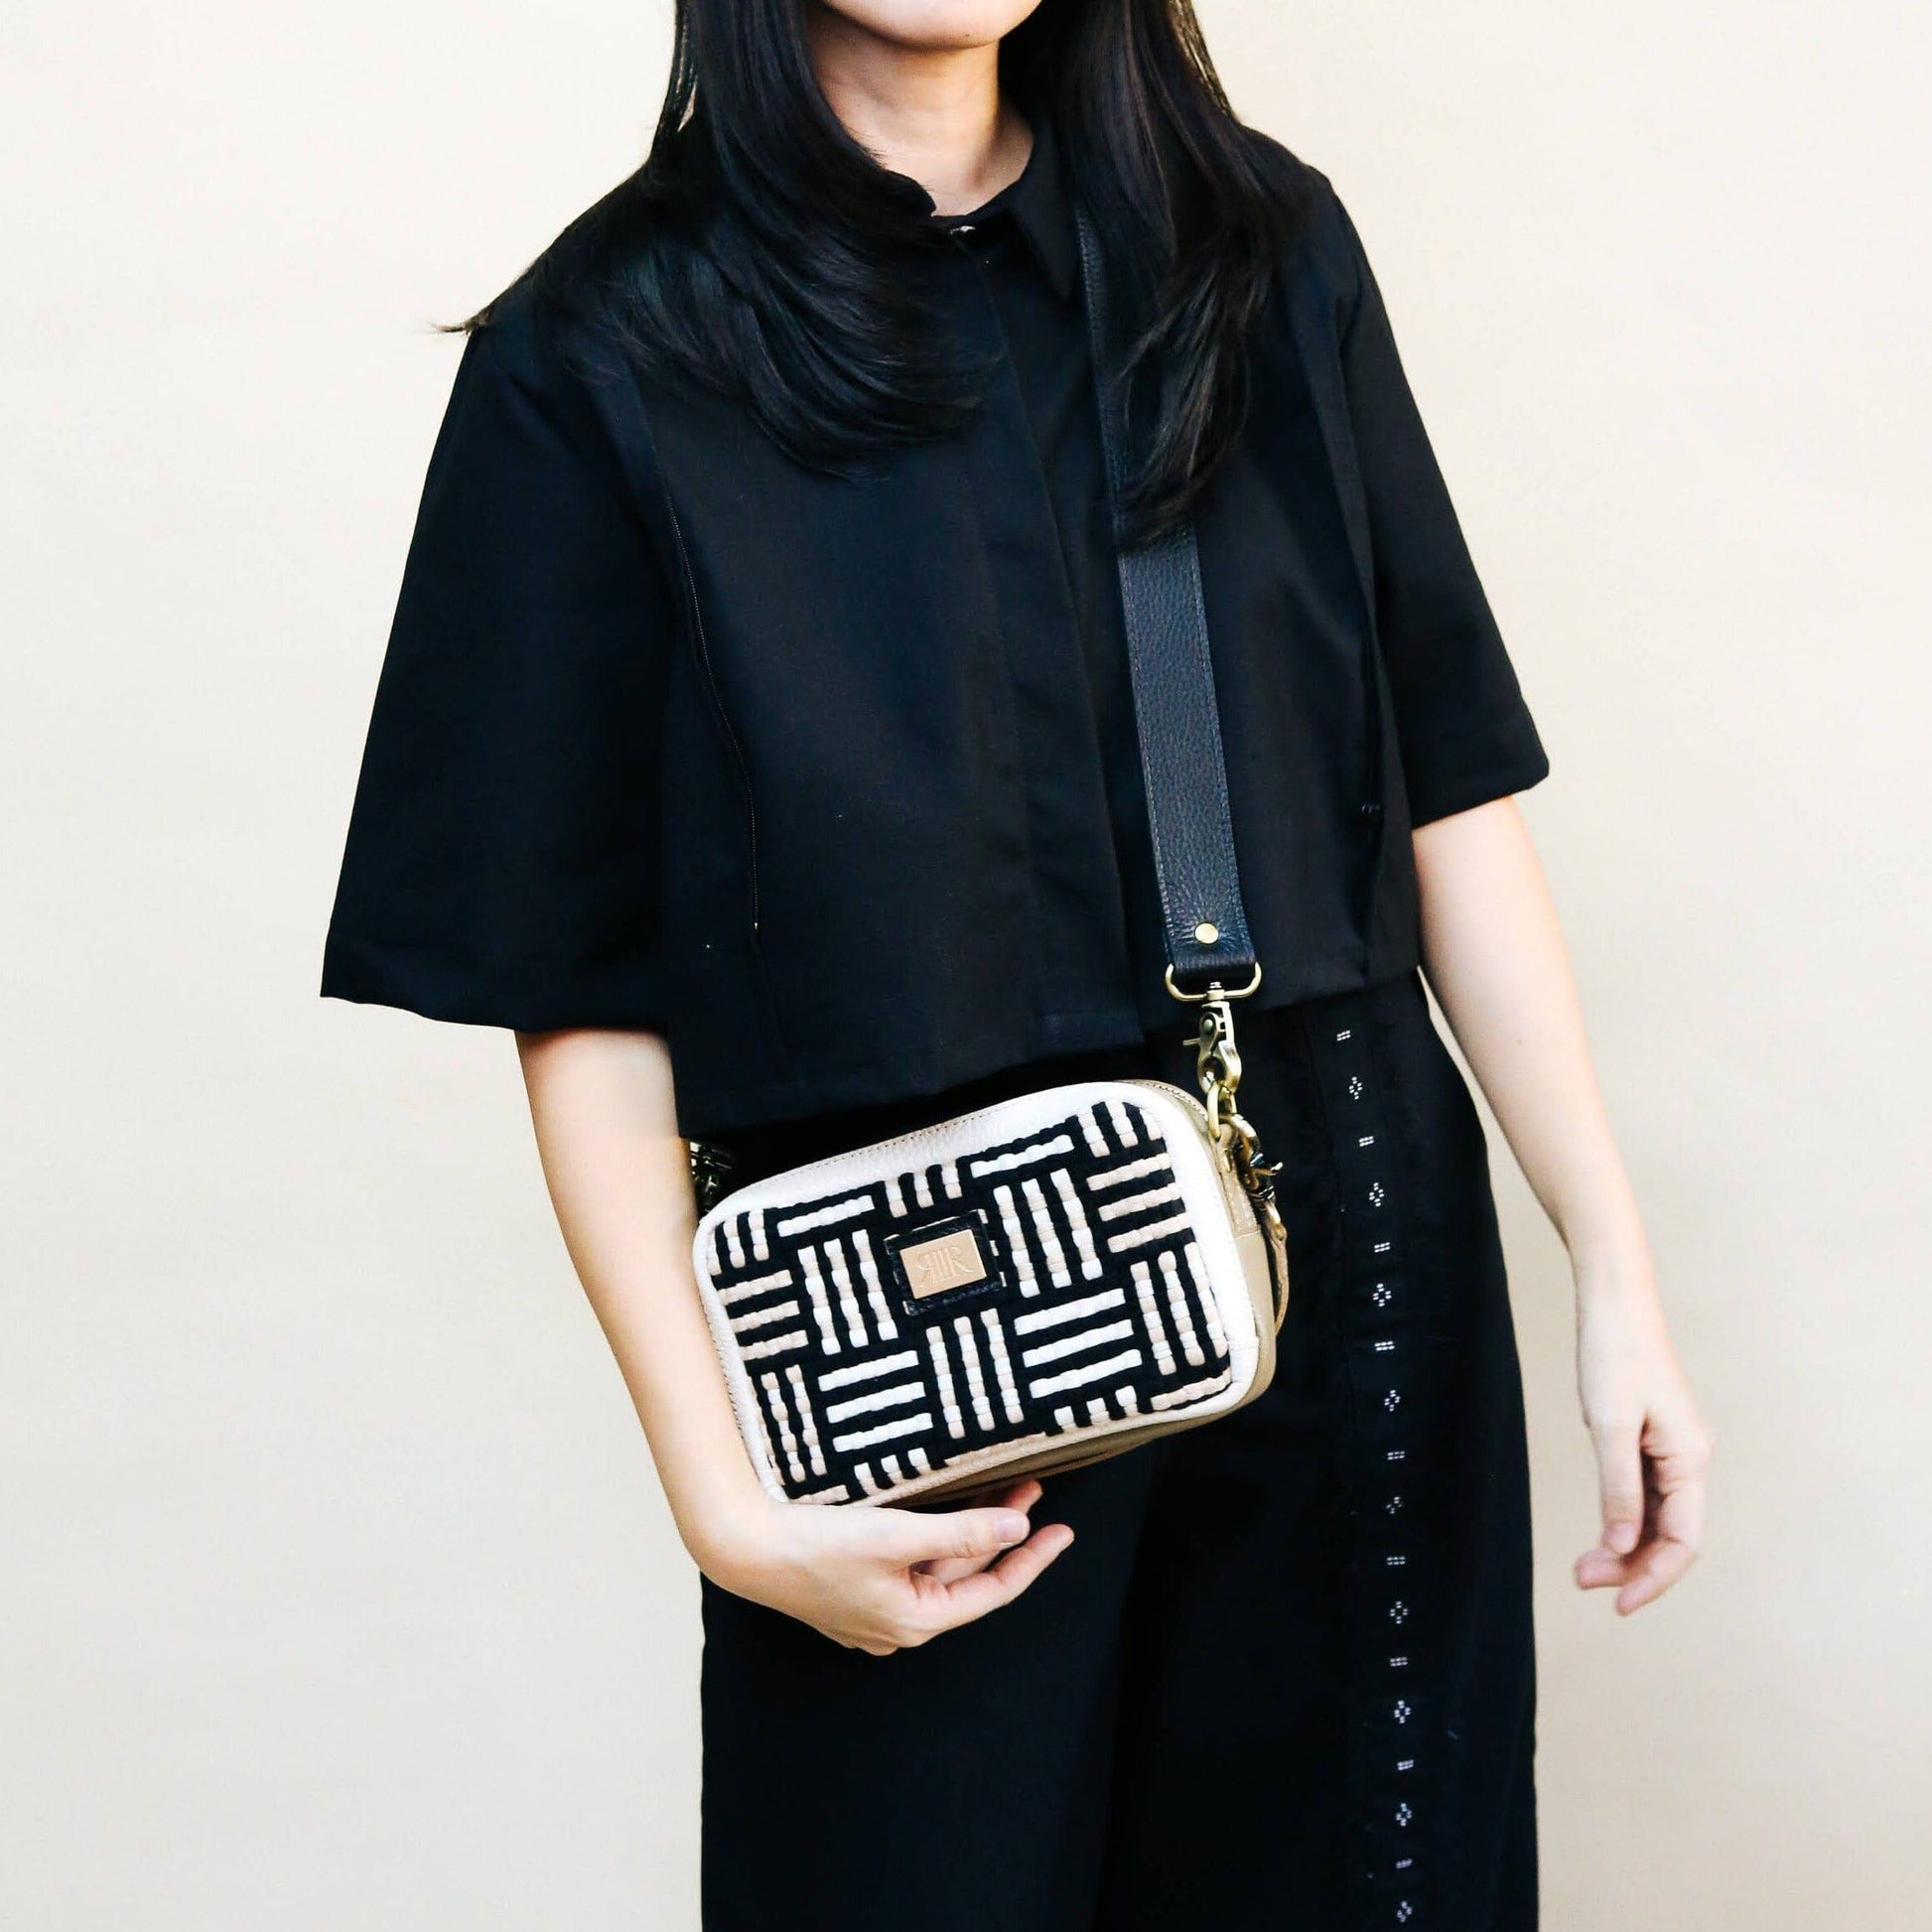 Bento Mat Pattern Black & Beige Fashion Rags2Riches